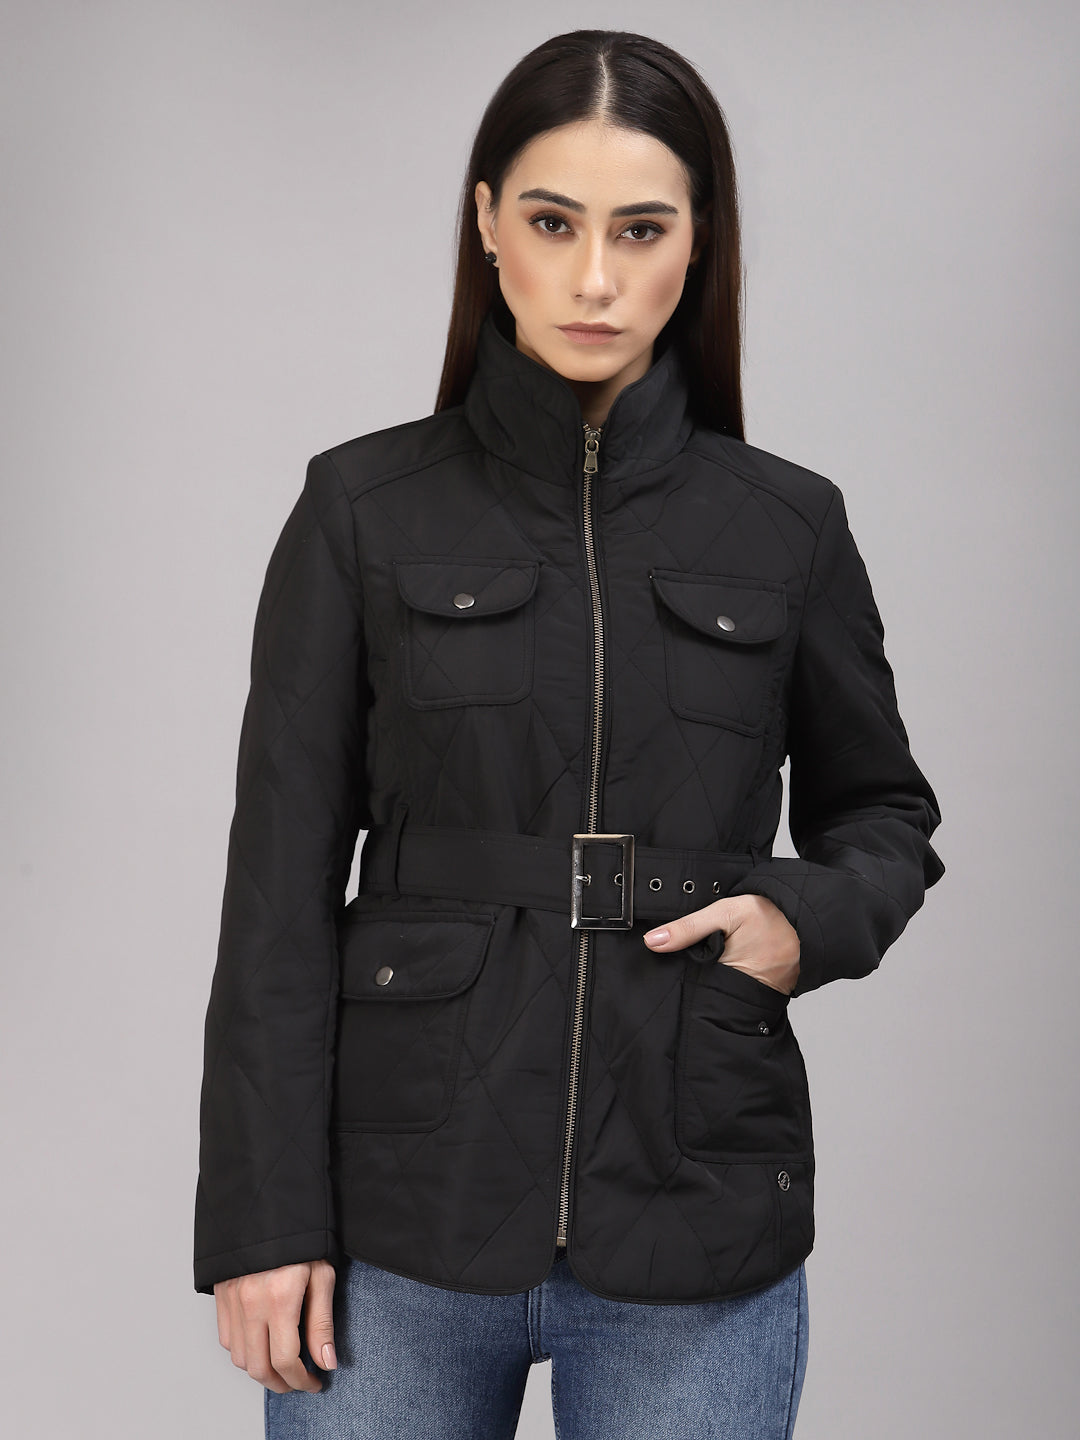 Gipsy Women Mock Collar Regular Full Sleeves Polyester Fabric Black Jackets